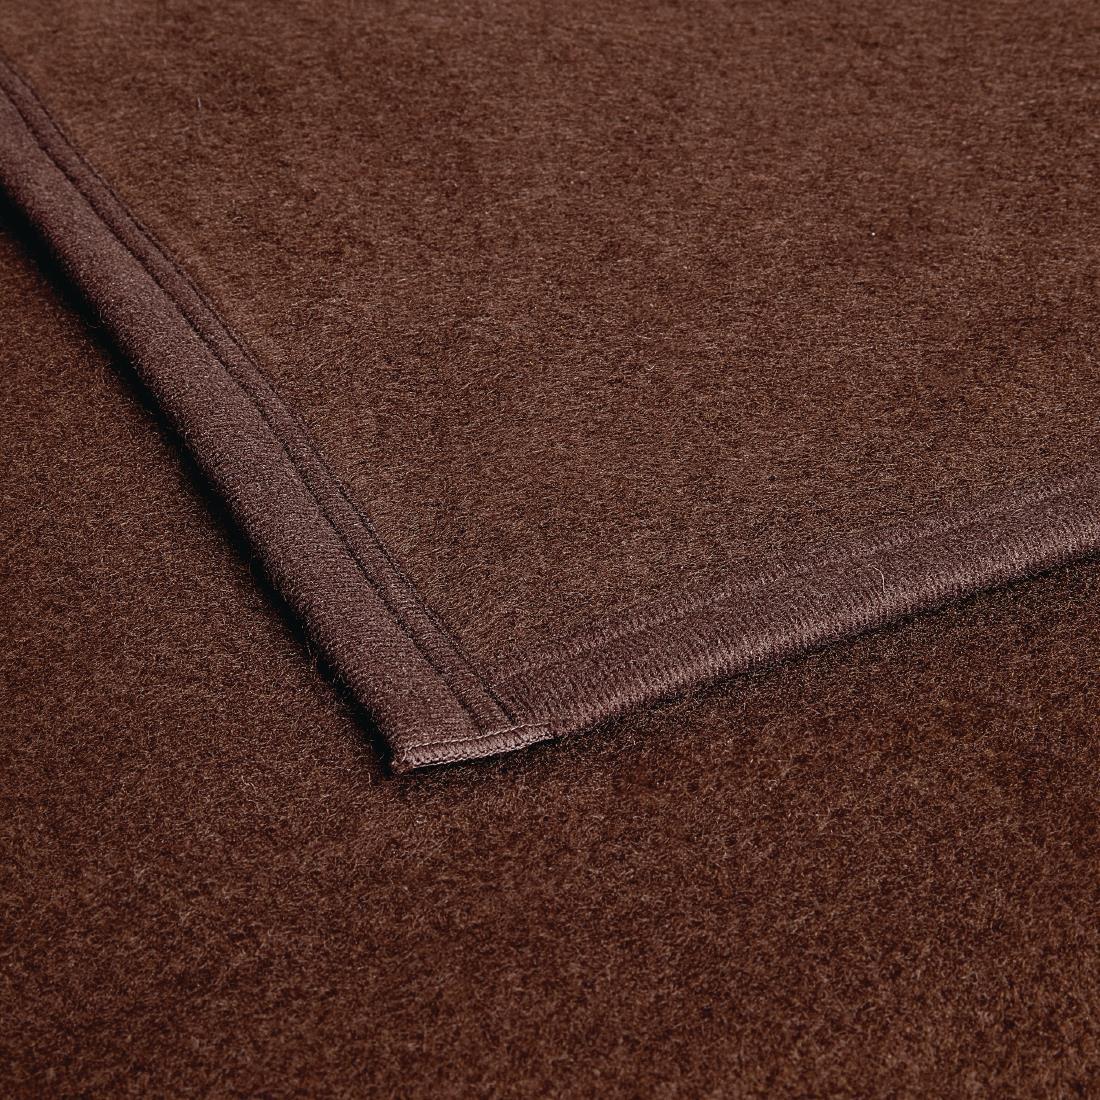 Comfort Fleece Blanket Chocolate - HD344  - 3